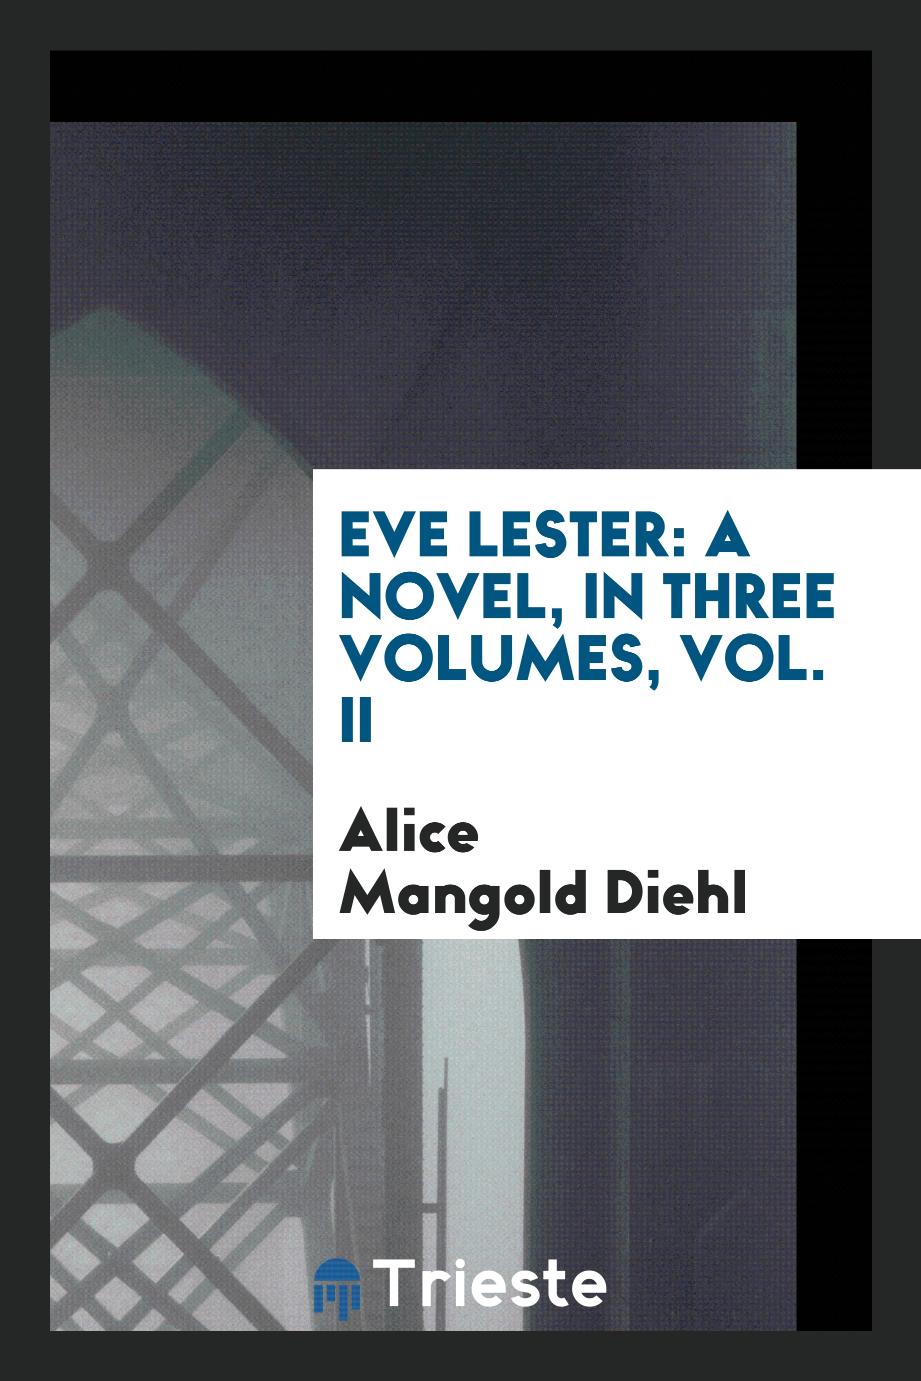 Eve Lester: A Novel, in Three Volumes, Vol. II